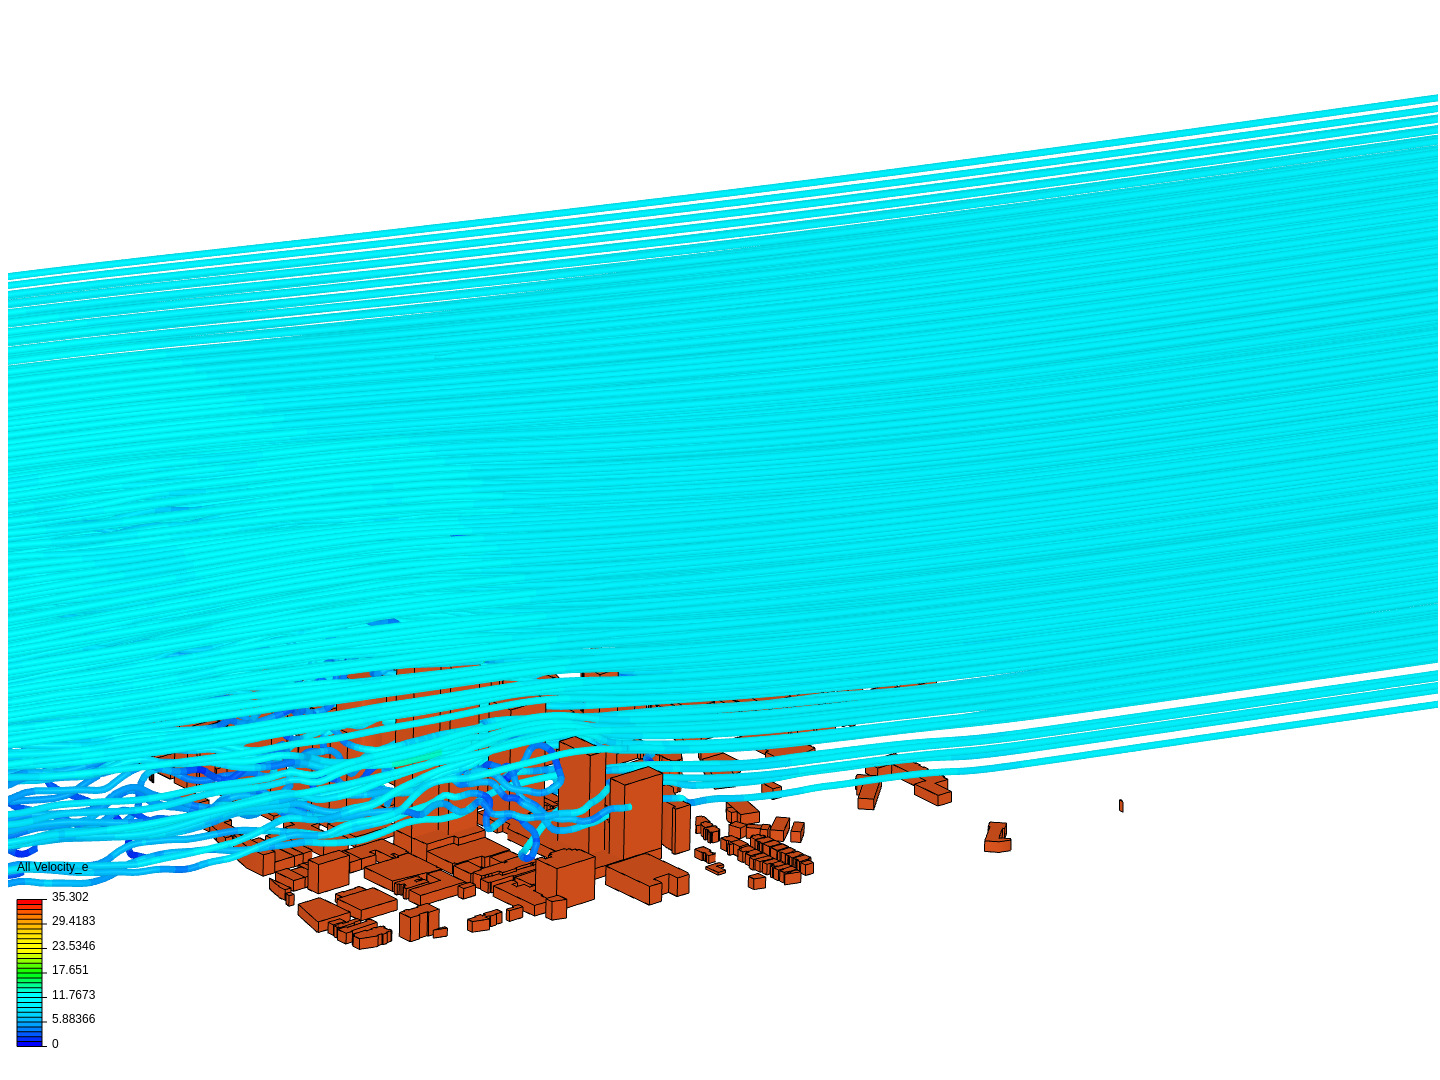 Wind analysis image